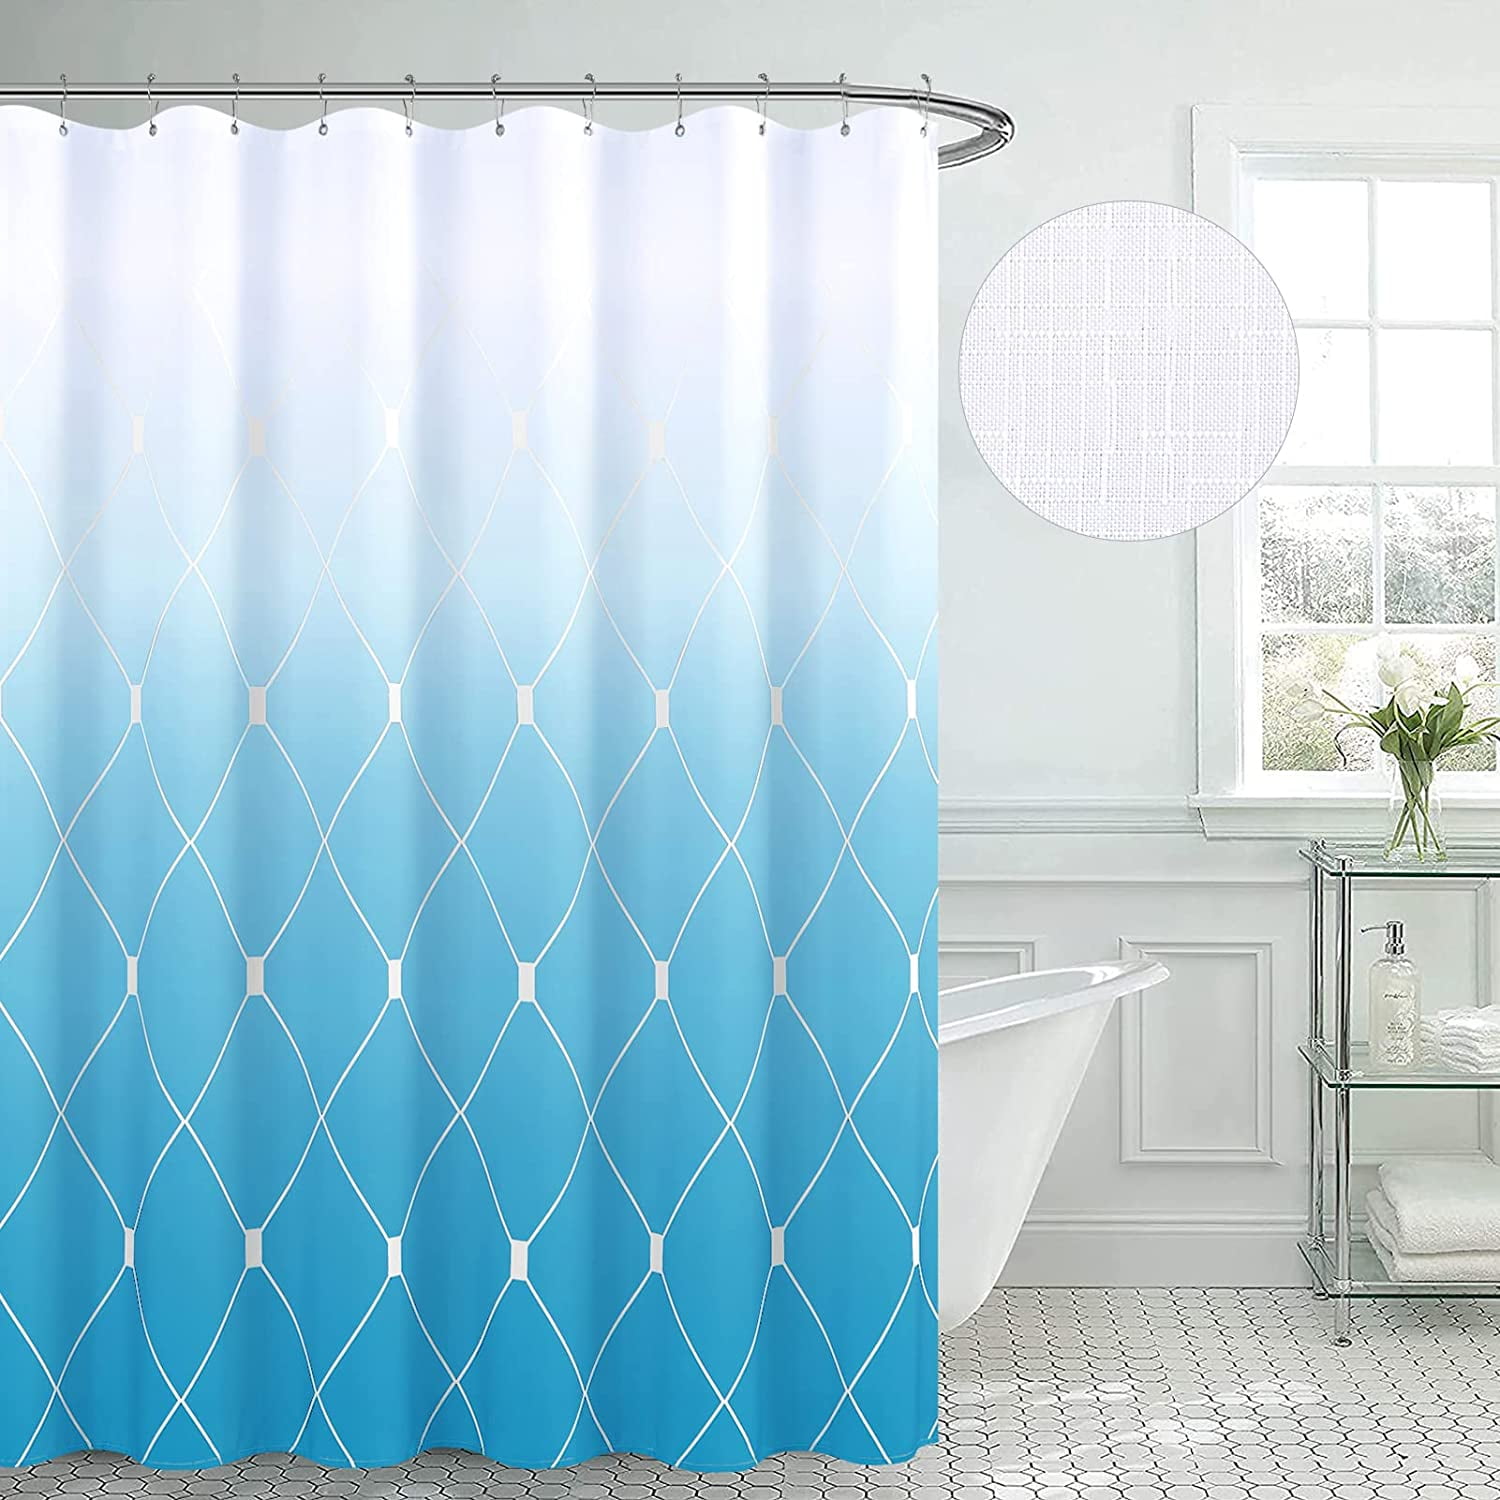 Sonernt Teal Geometric Shower Curtains for Bathroom Beach Theme Blue White Shower  Curtain Water Repellent Bath Curtain for Modern Bathroom Decor Whit Hooks,  72x72 inch, Turquoise 